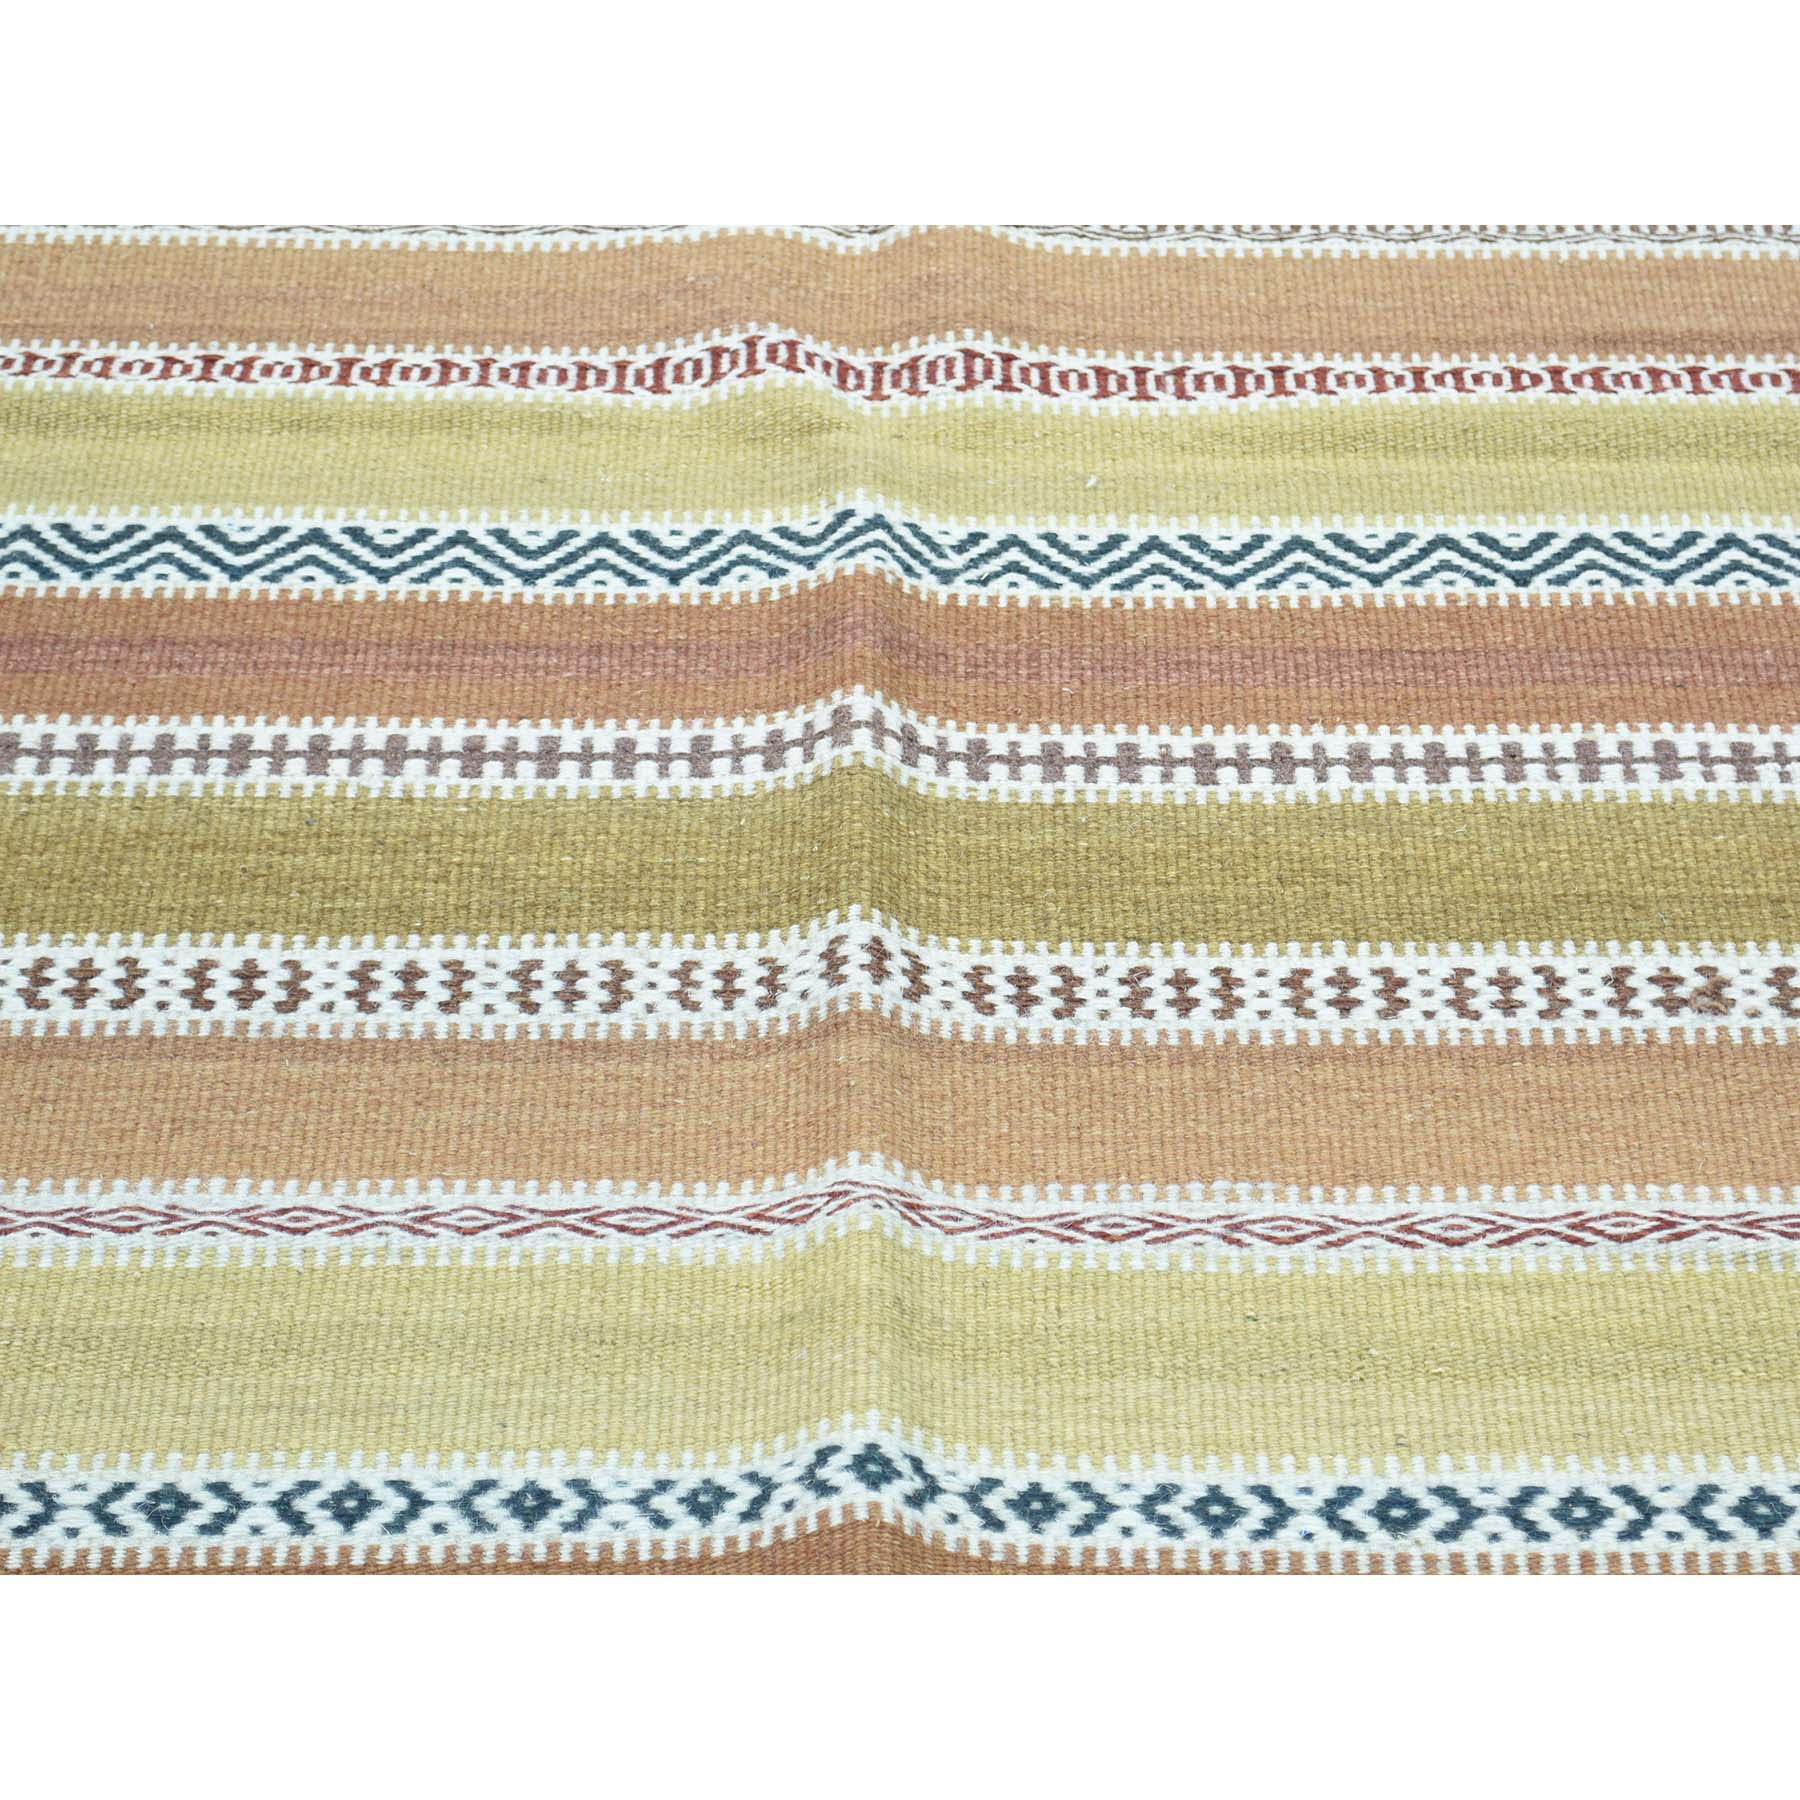 4-x6- Hand-Woven Striped Durie Kilim 100 Percent Wool Flat Weave Rug 